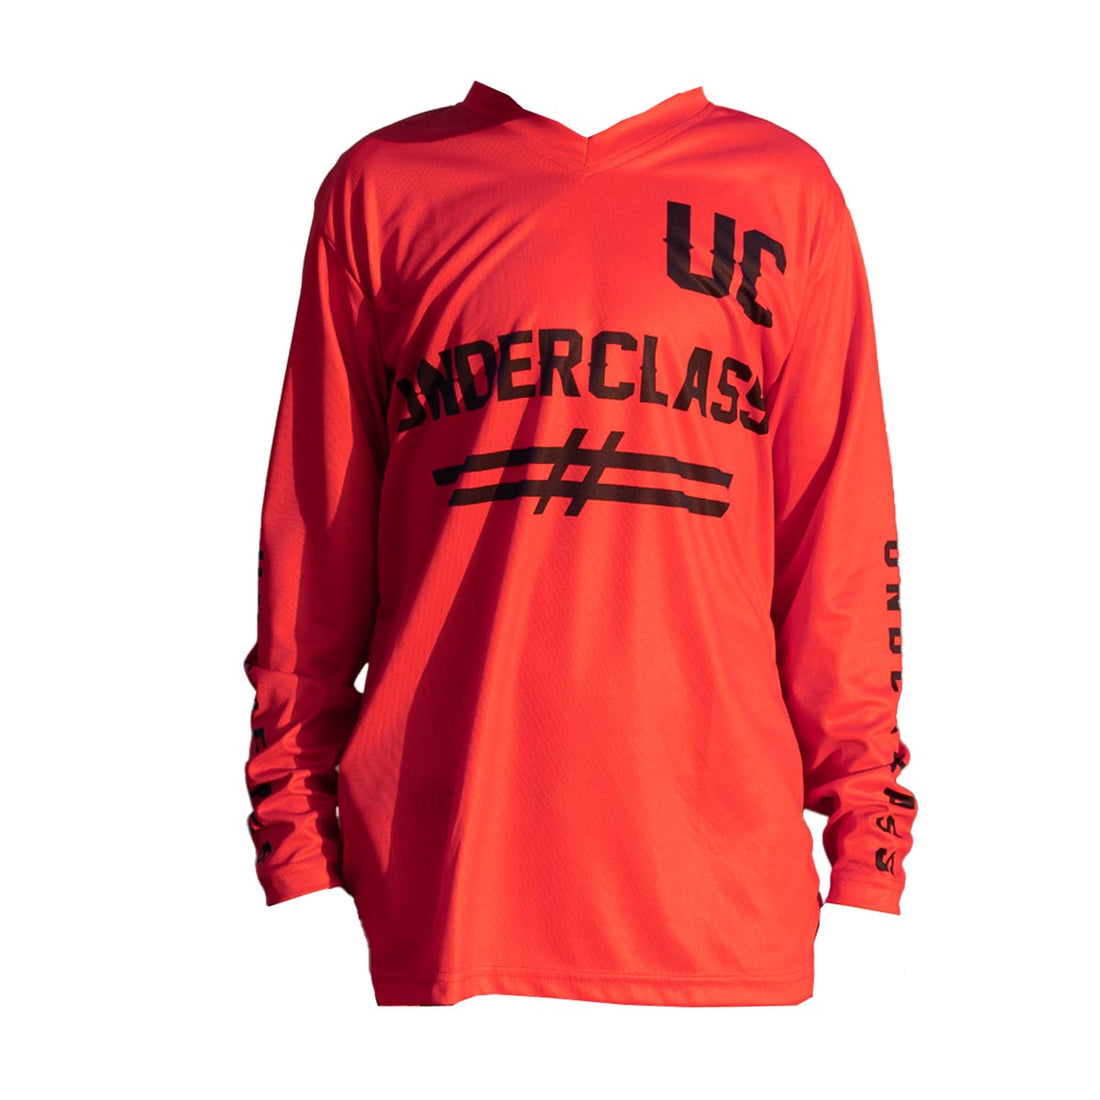 Underclass MX1405 Jersey - Long Sleeve - Red